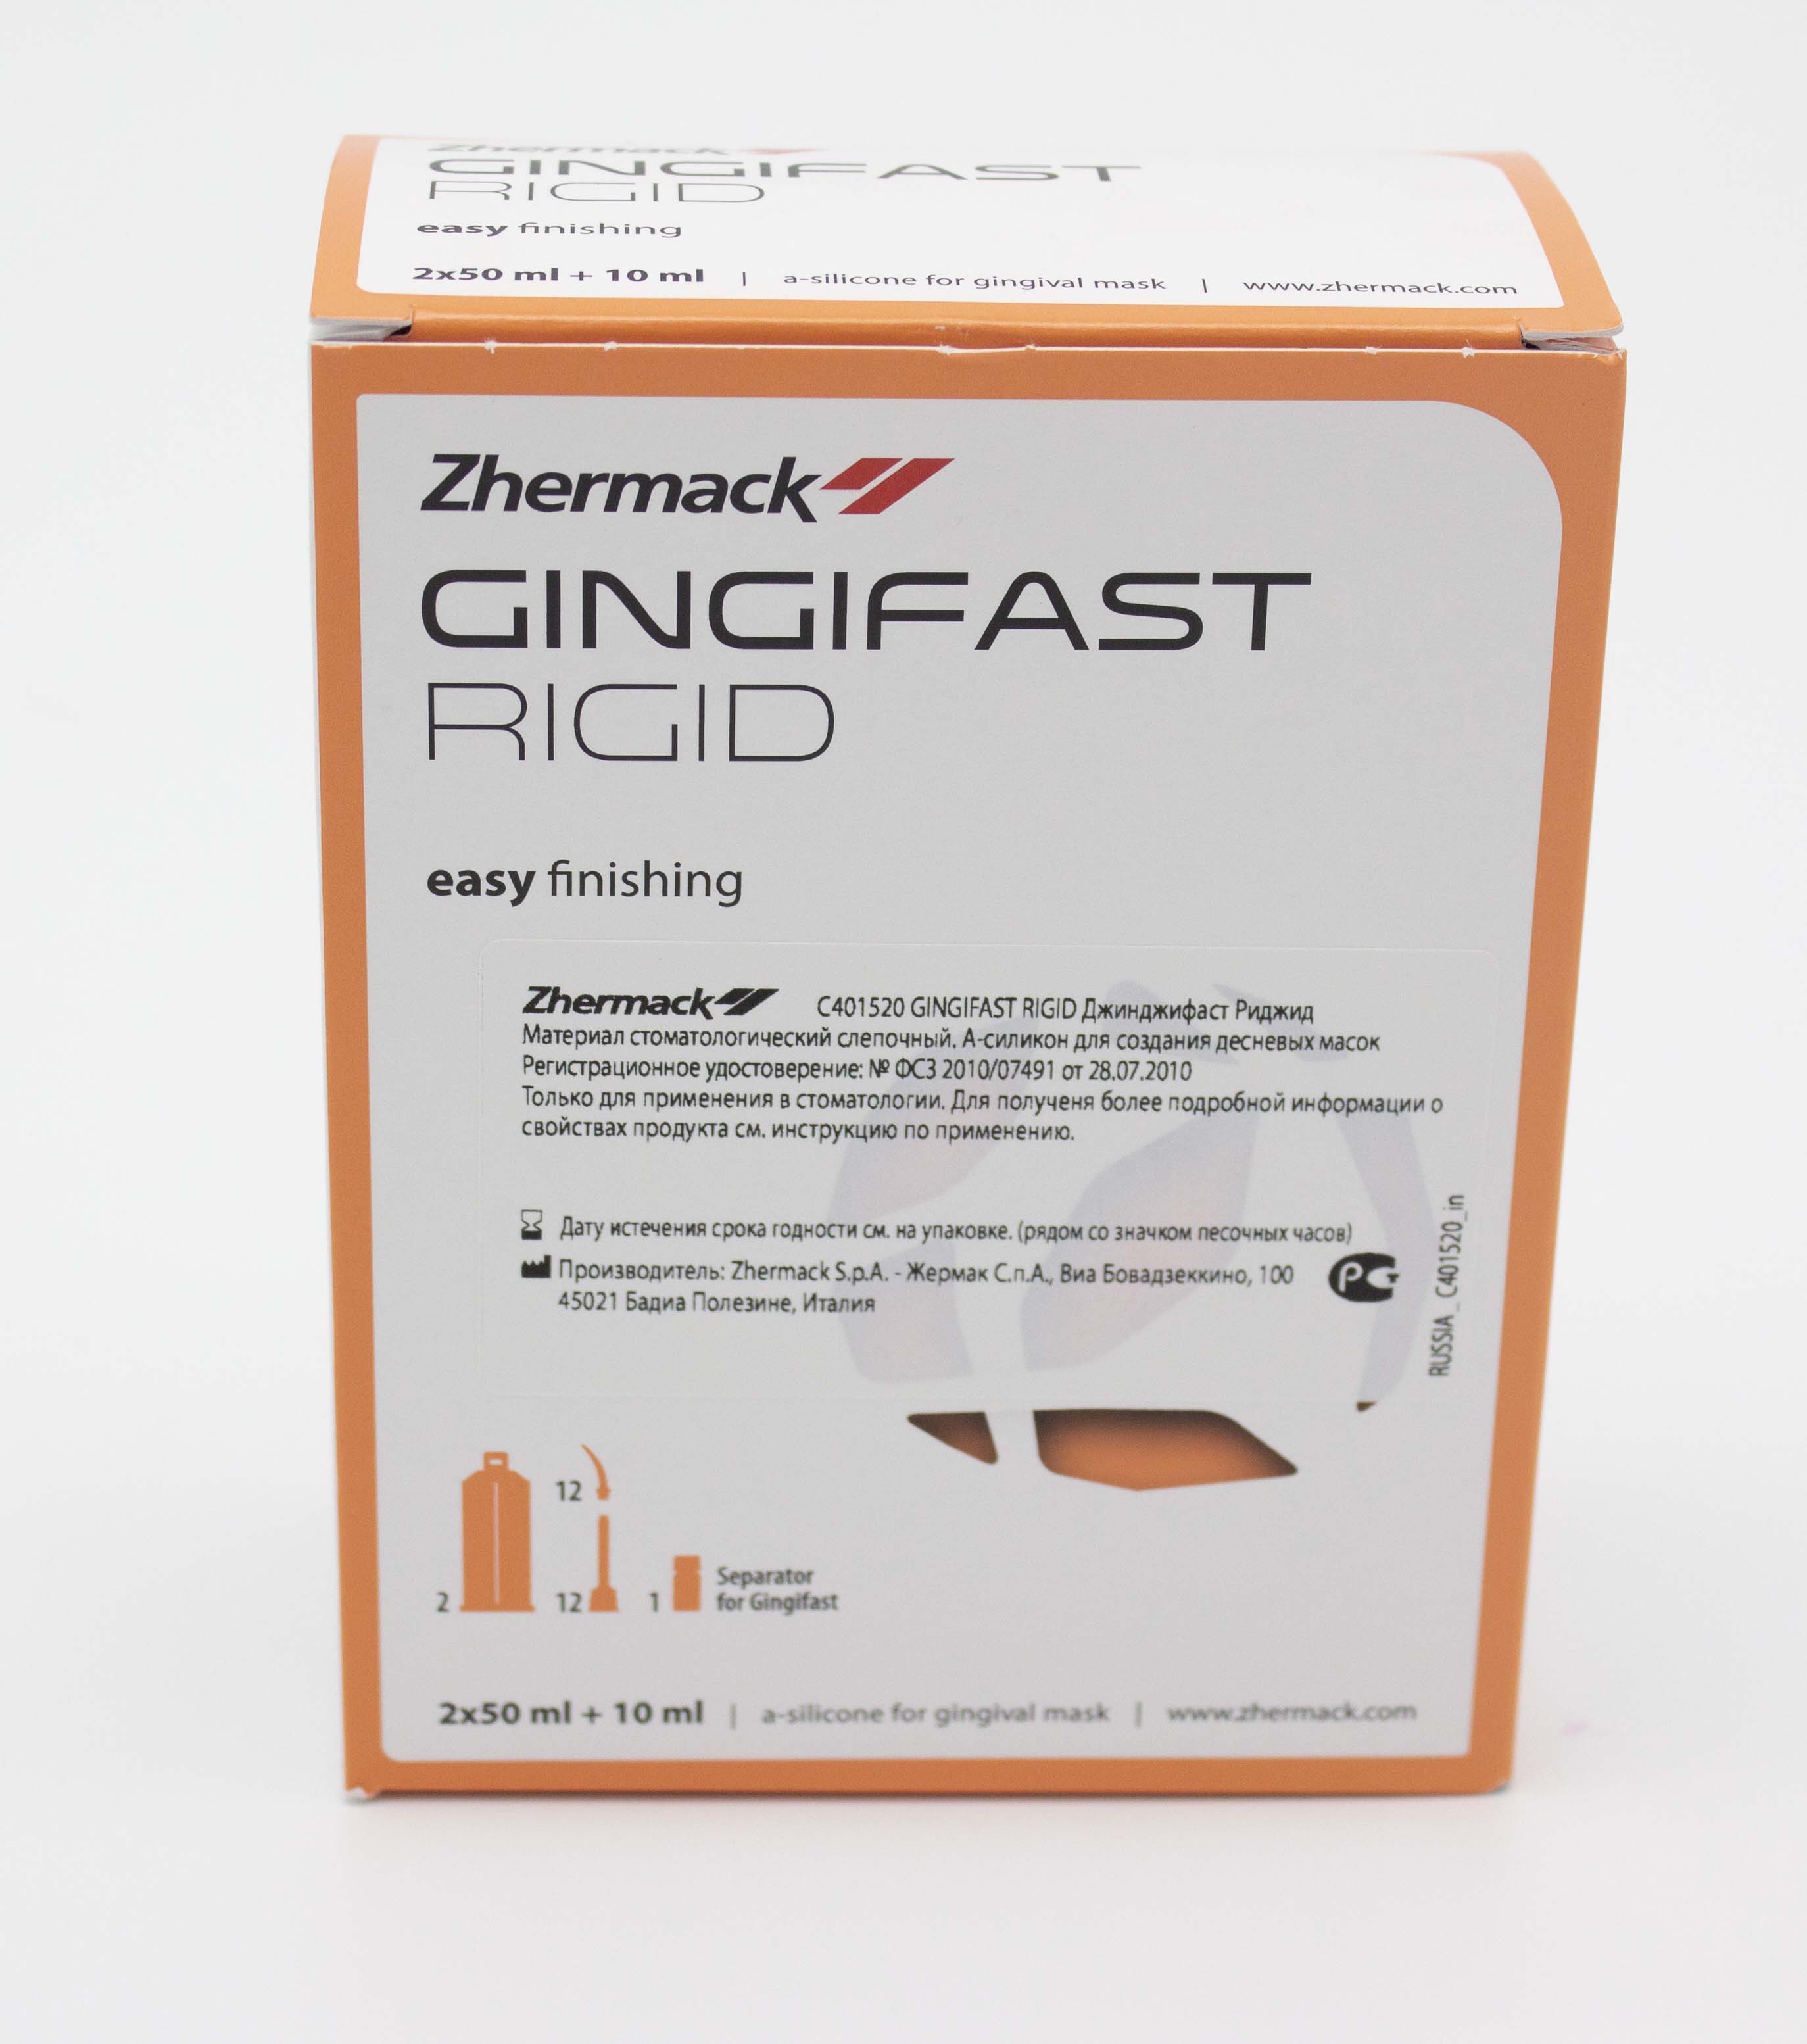 Gingifast Rigid - лабораторный А-силикон, 2*50 мл + насадки